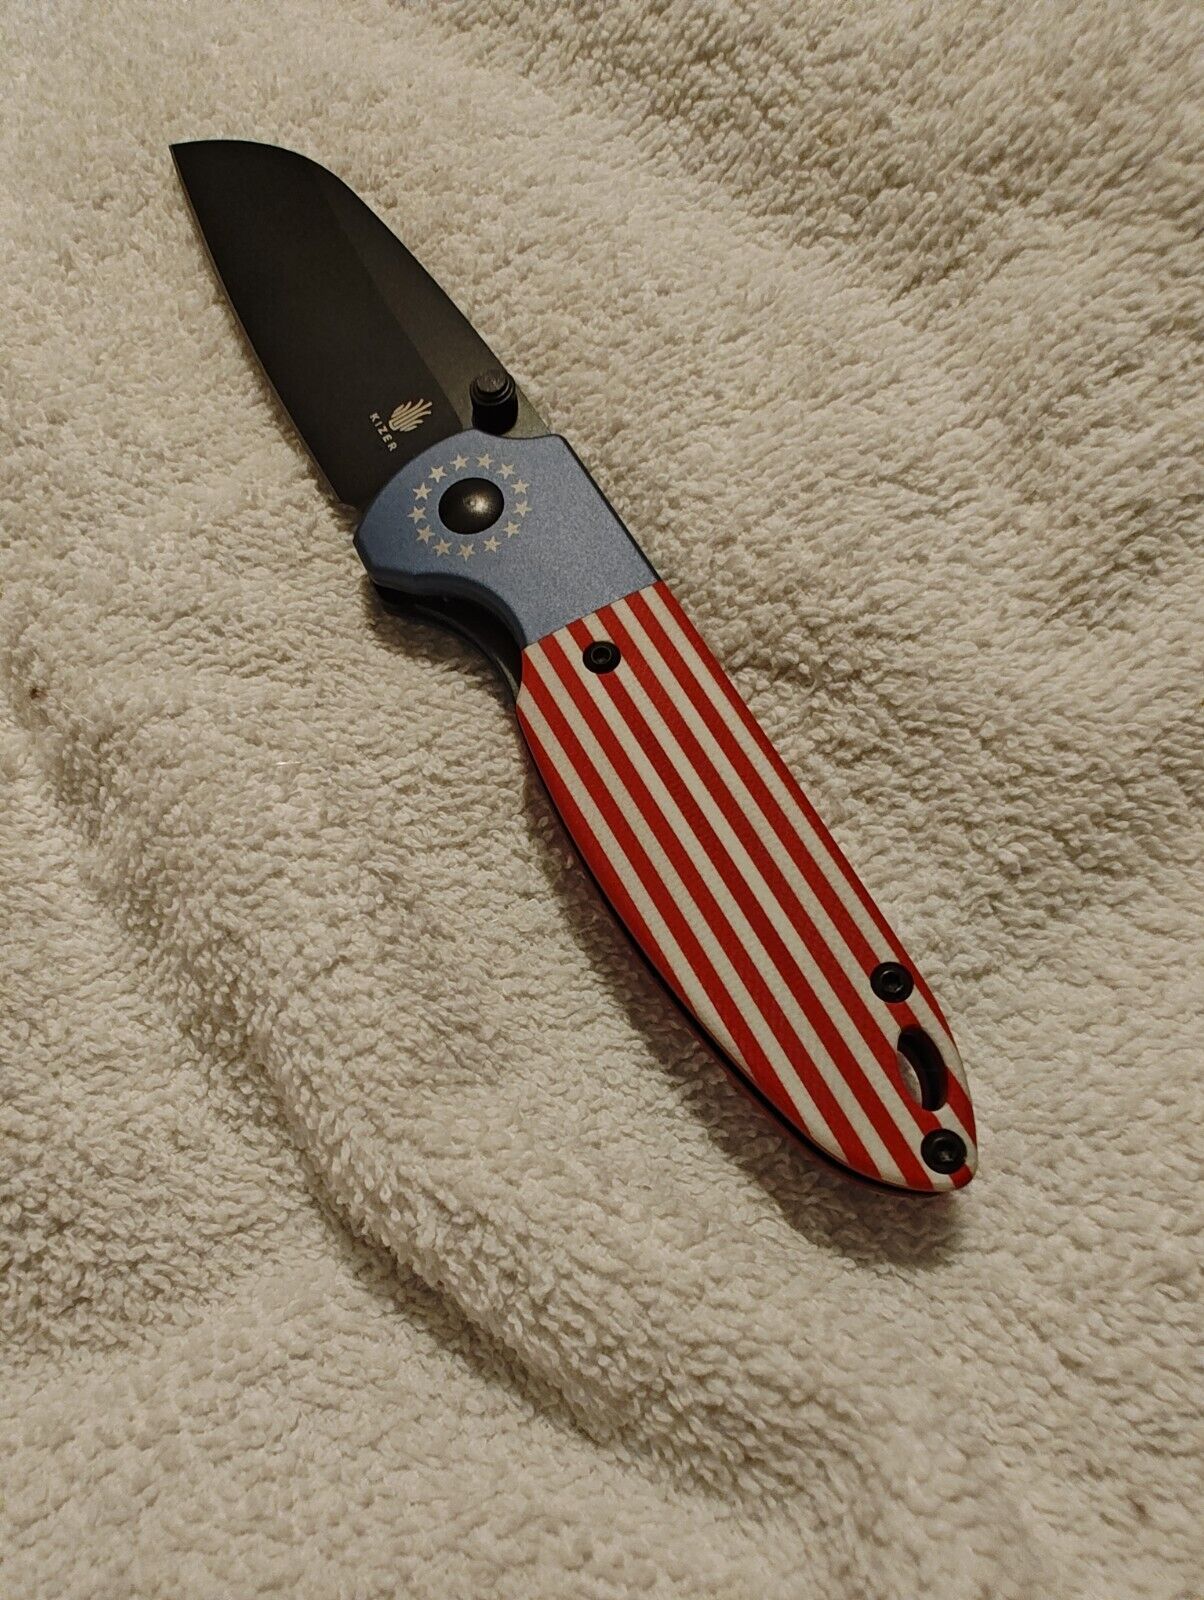 KIzer Deviant Folding Knife, US Betsy Ross Flag Theme, Aluminum/G-10 Scales